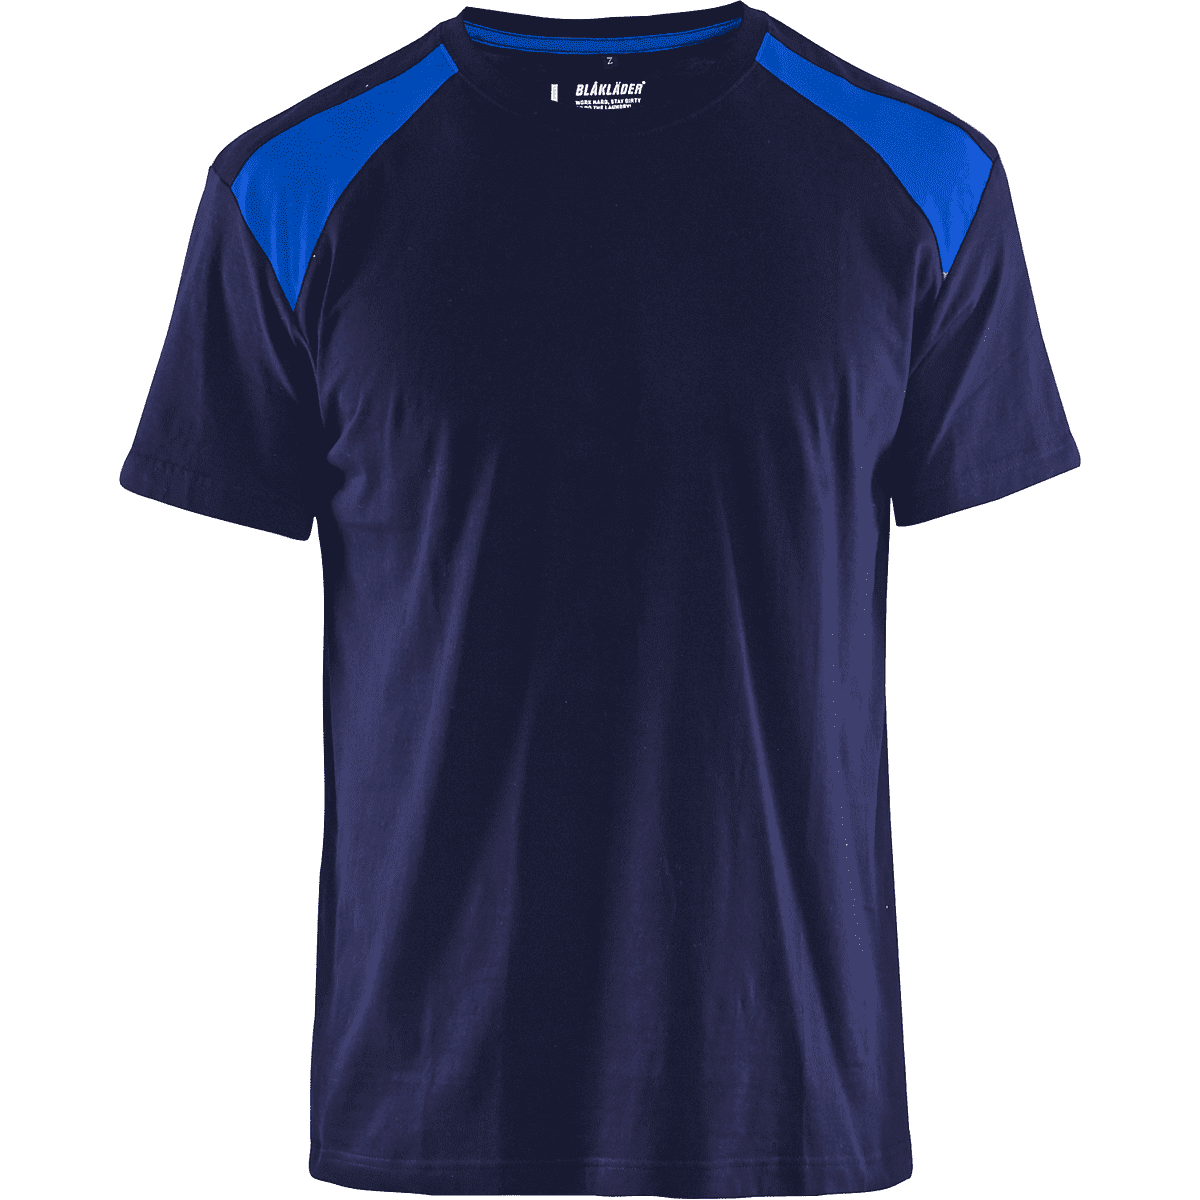 Blakläder T-Shirt marineblau/ kornblau, Gr. S